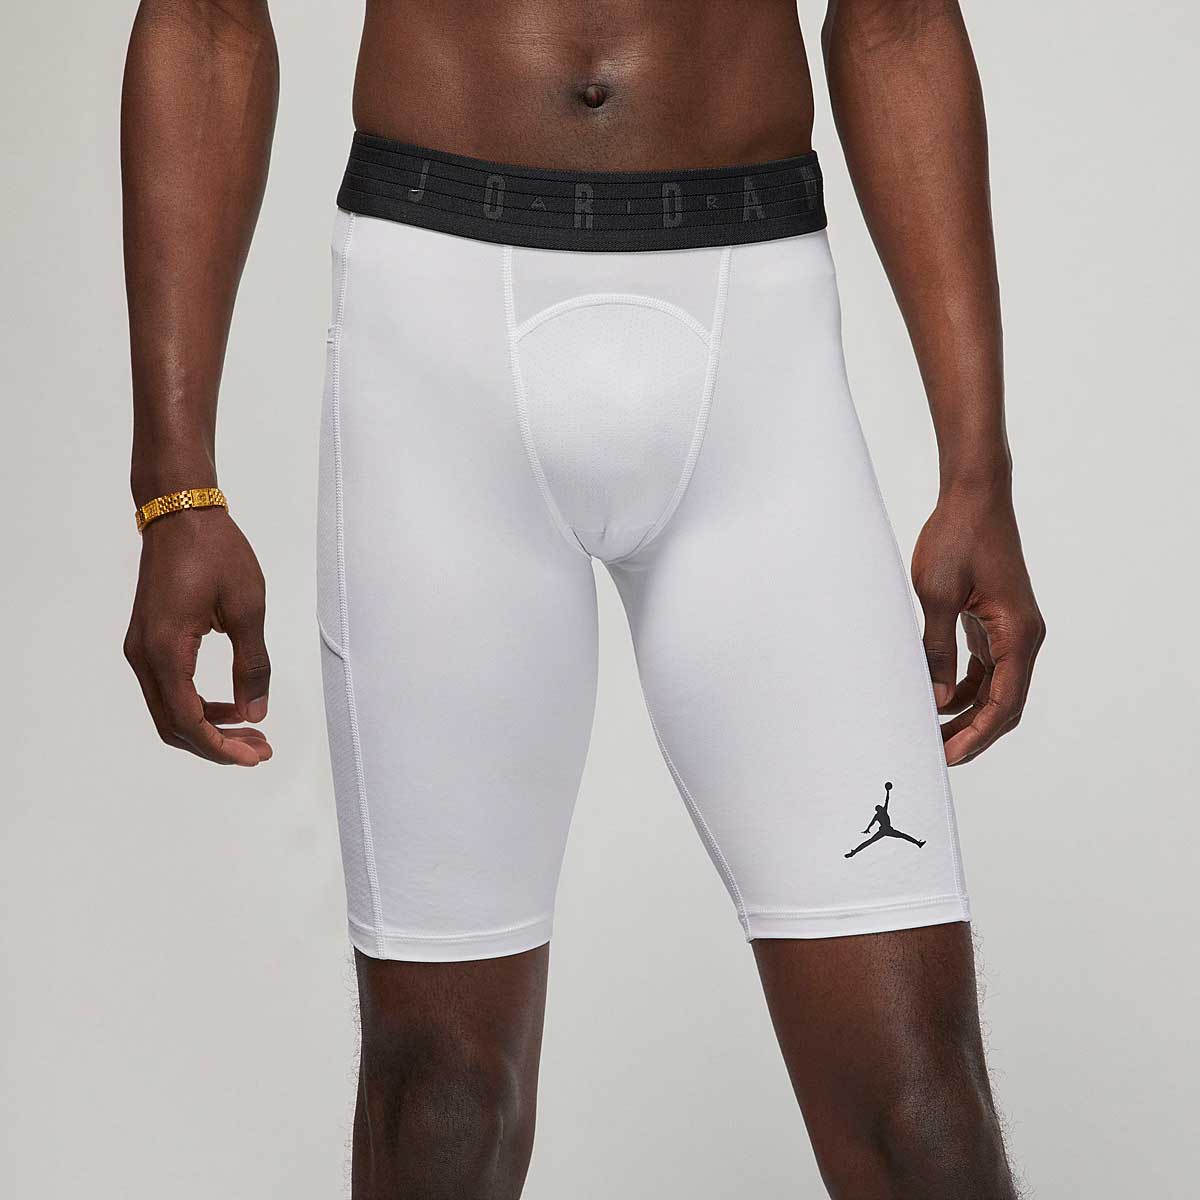 Jordan Dri-Fit Sports Compression Shorts, White/Black